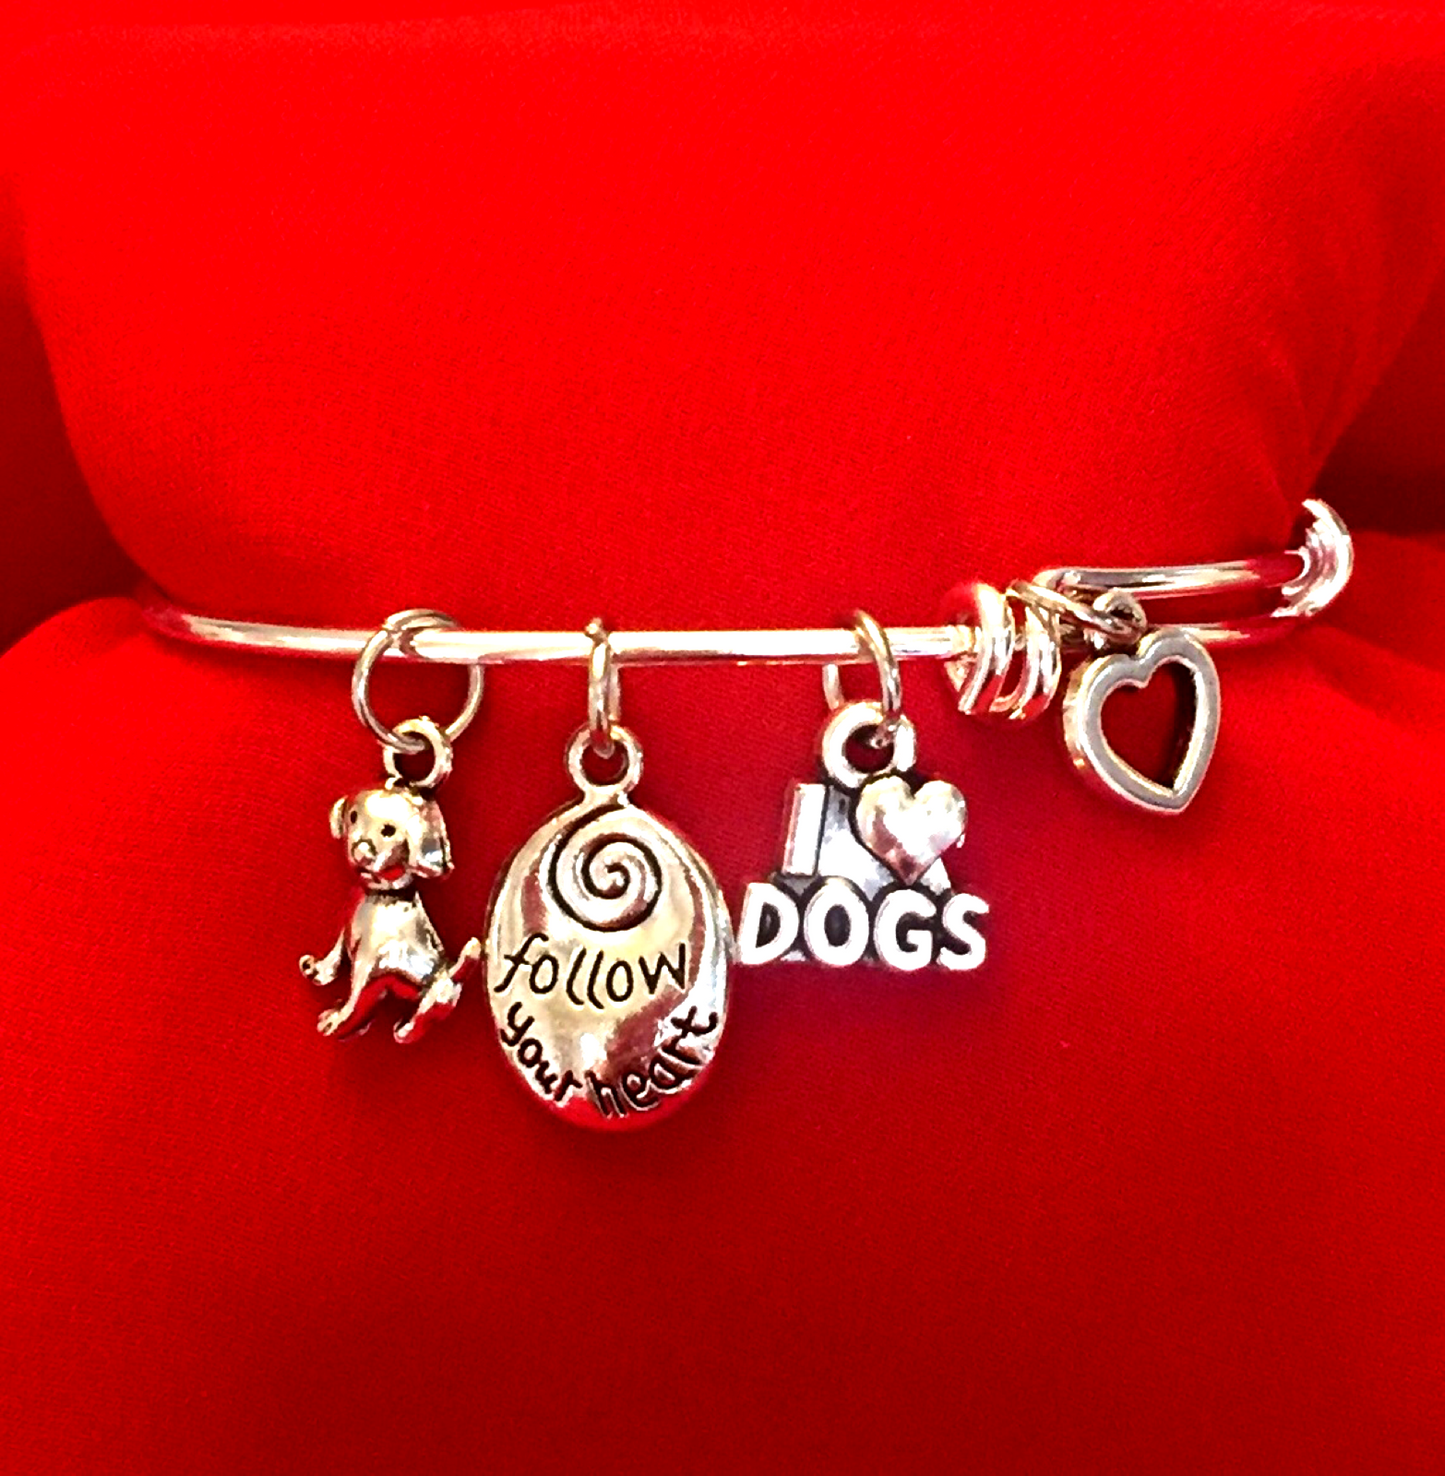 Dog Charm Bracelet - I Love Dogs - Cheer and Dance On Demand